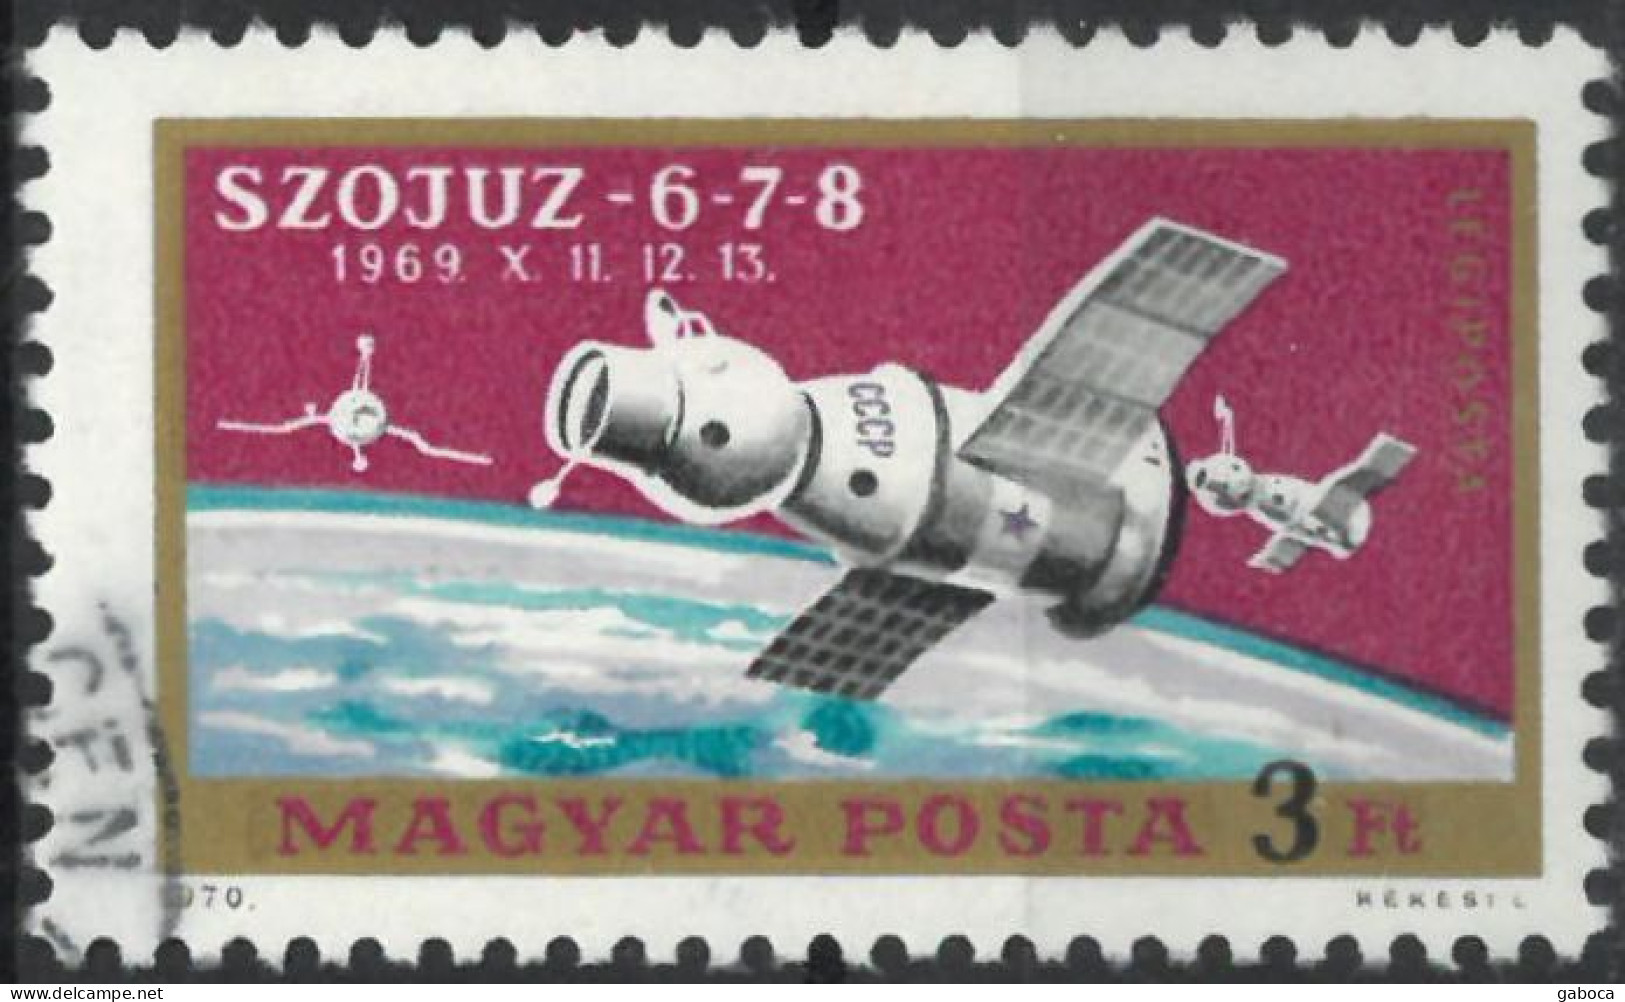 C4752 Space Spacetravel Astronaut Telecom Meteorology Satellite 1xSet+13xStamp Used Lot#580